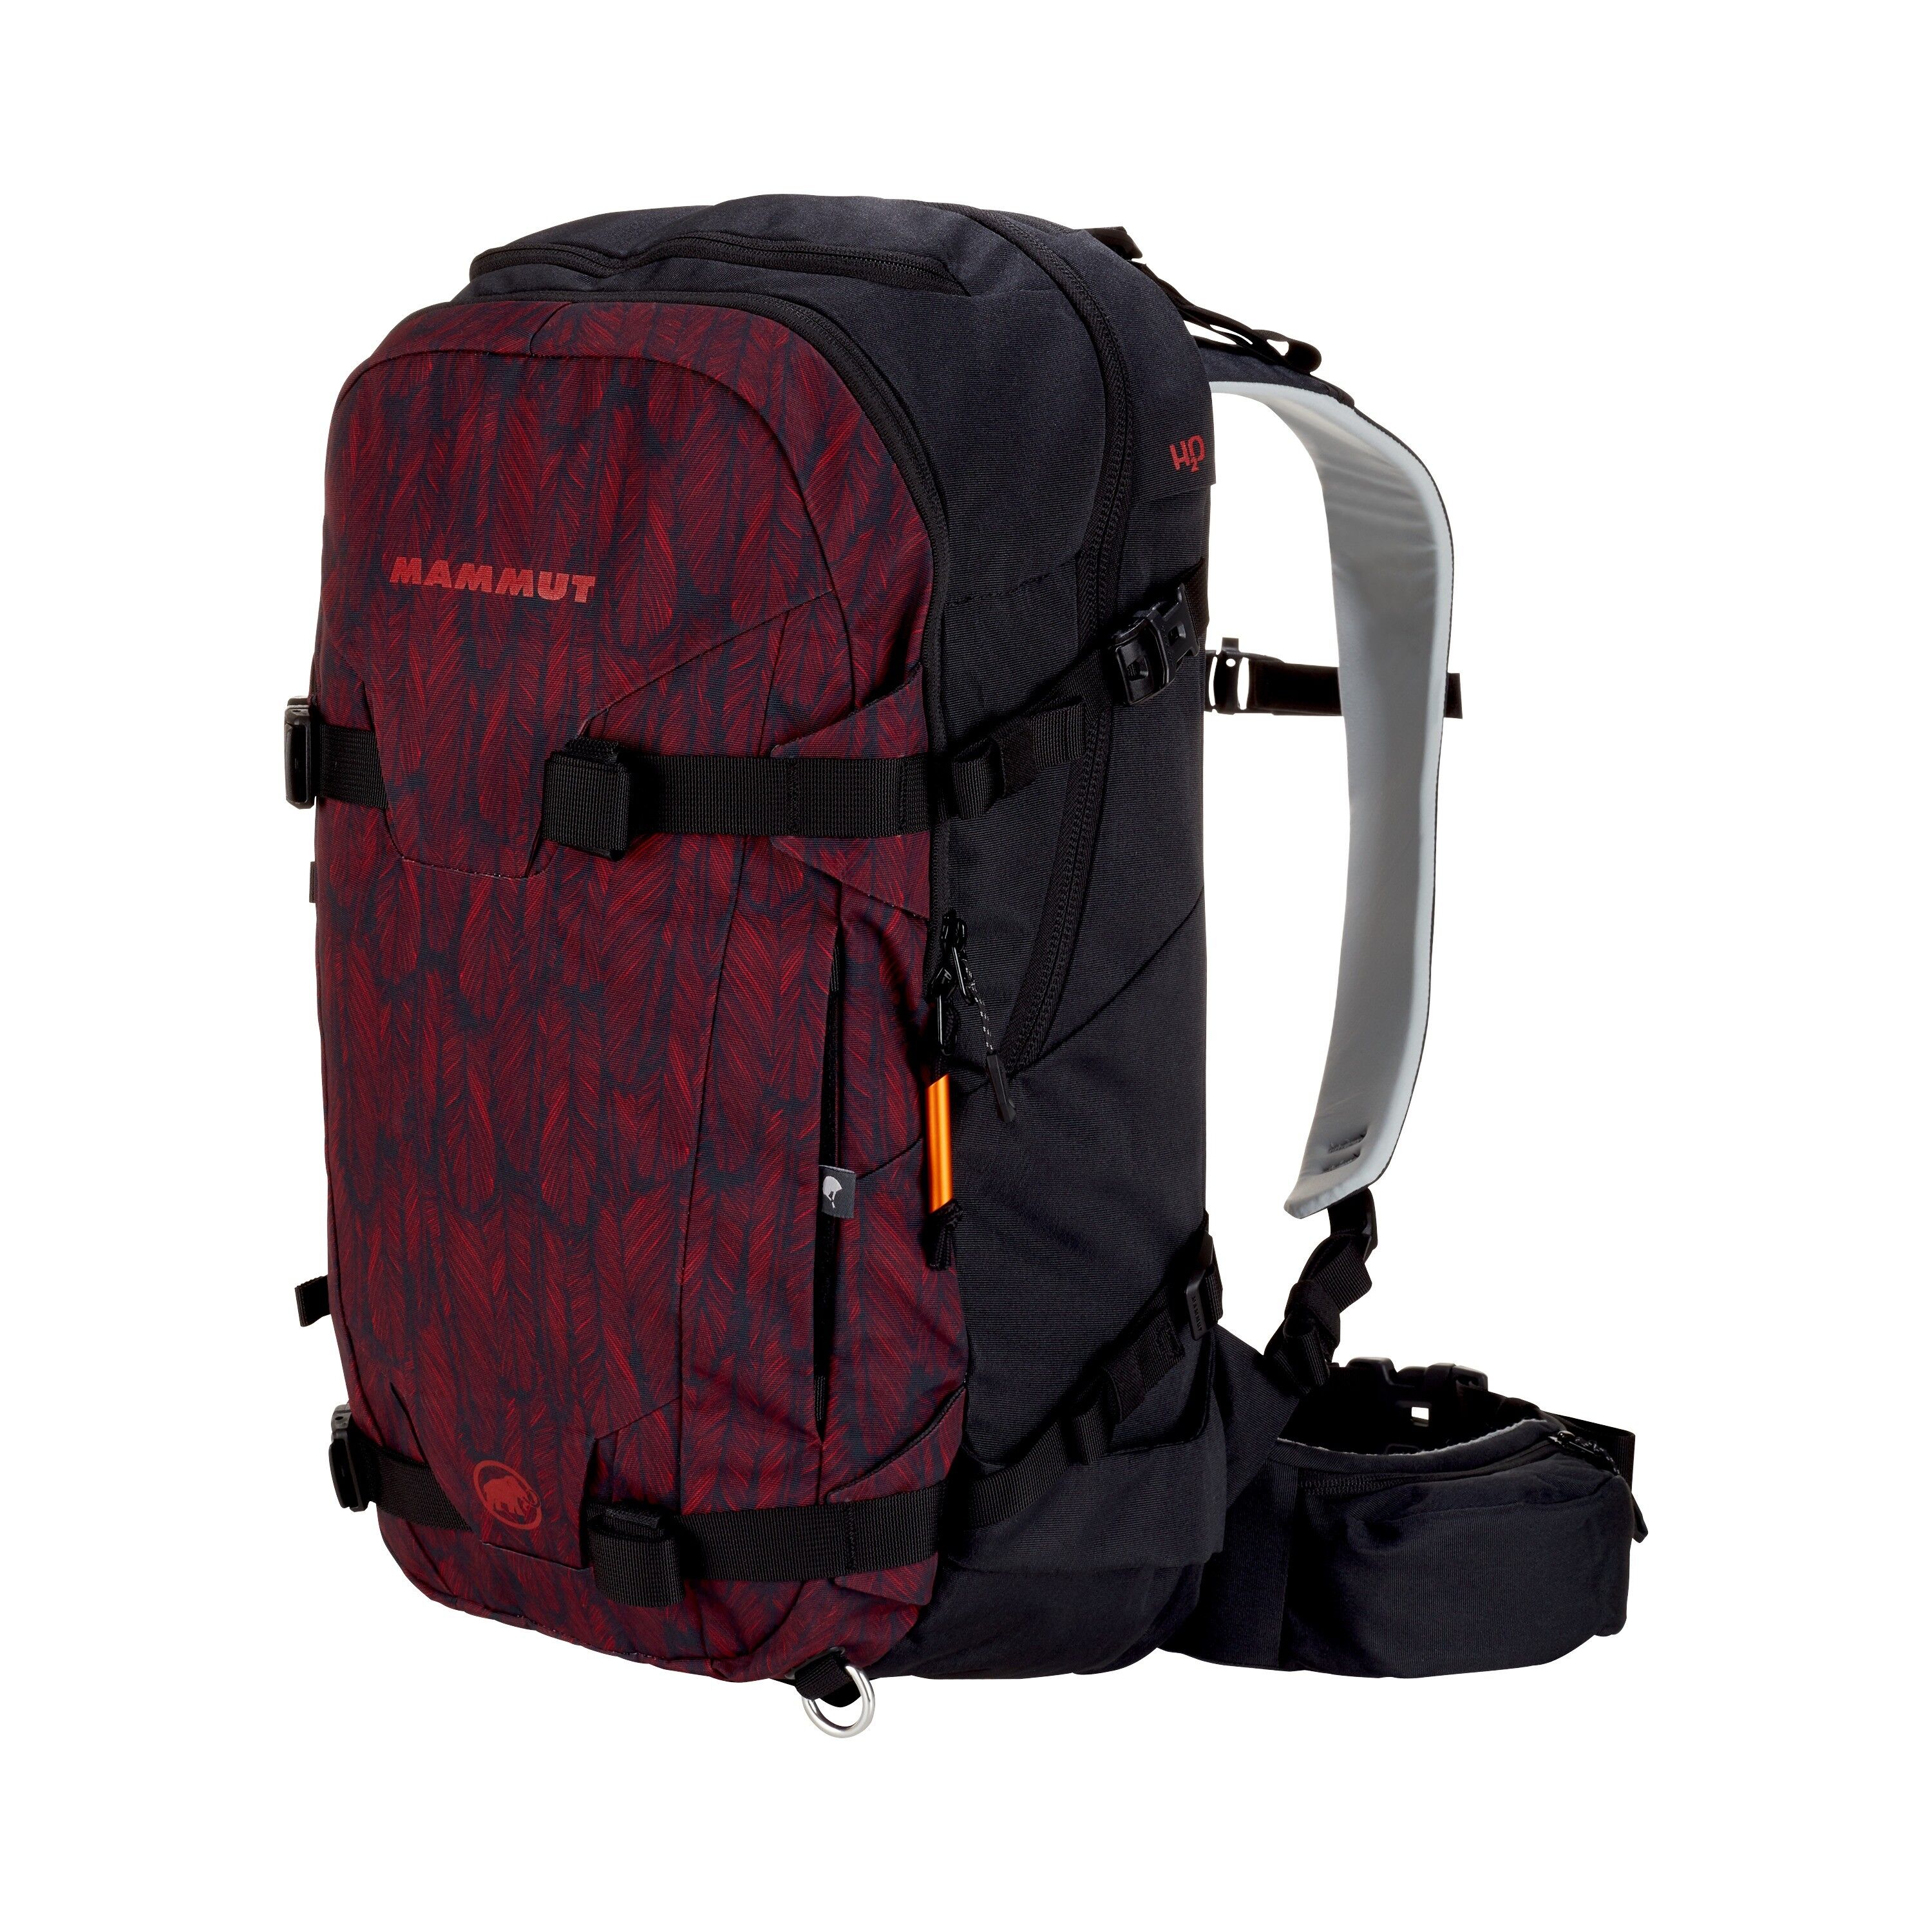 Mammut Nirvana 30 - Ski Touring backpack